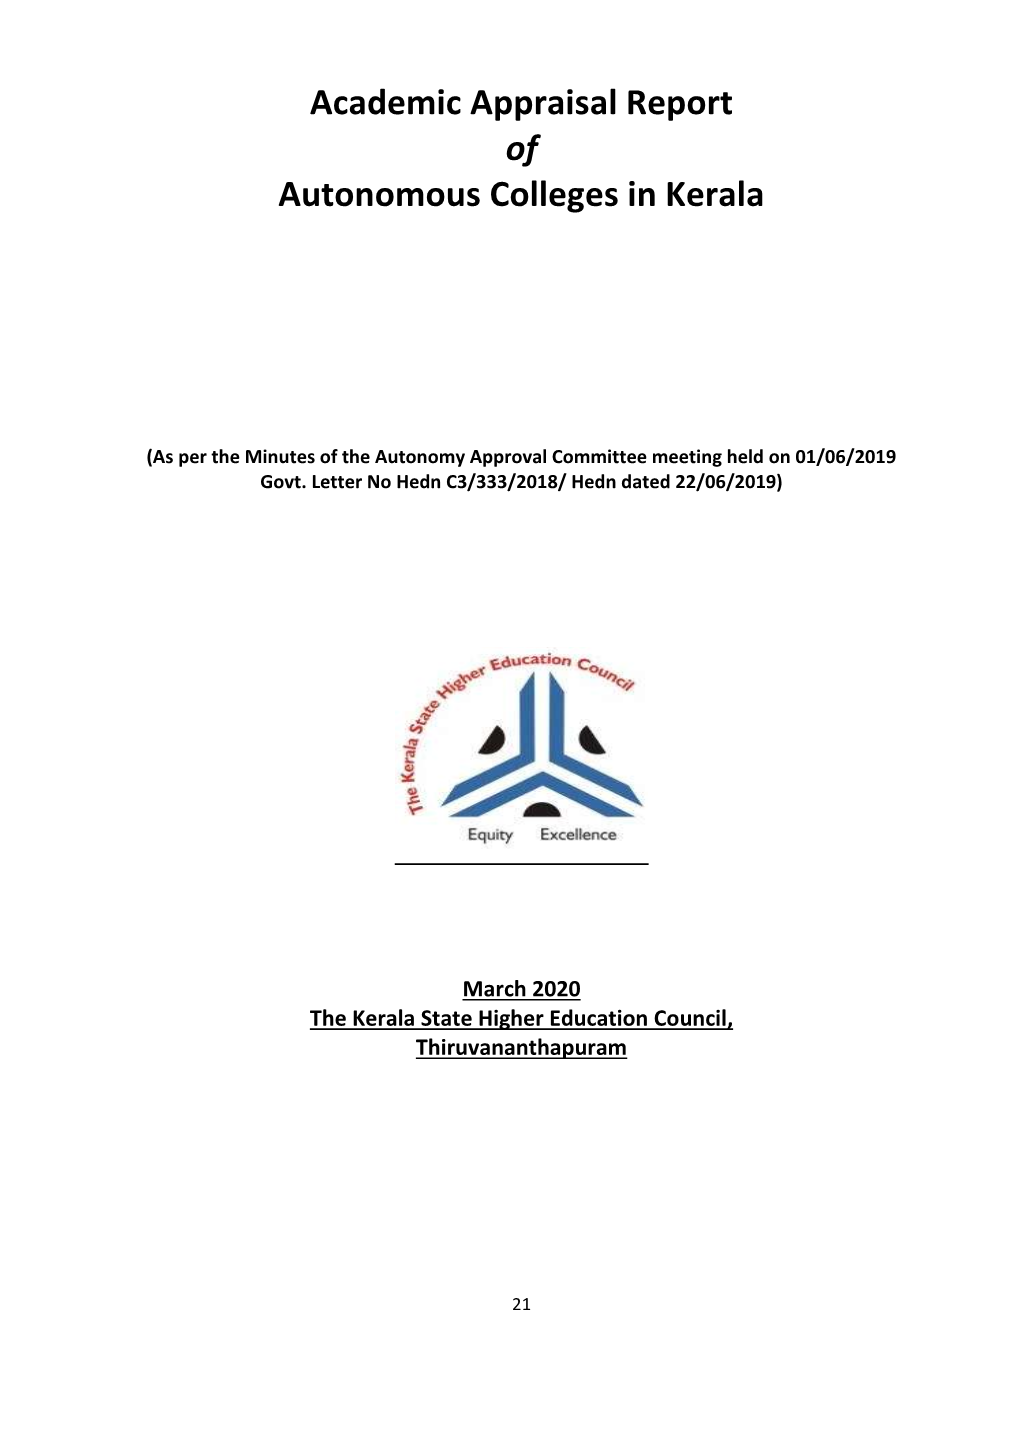 Academic Appraisal Report of Autonomous Colleges in Kerala